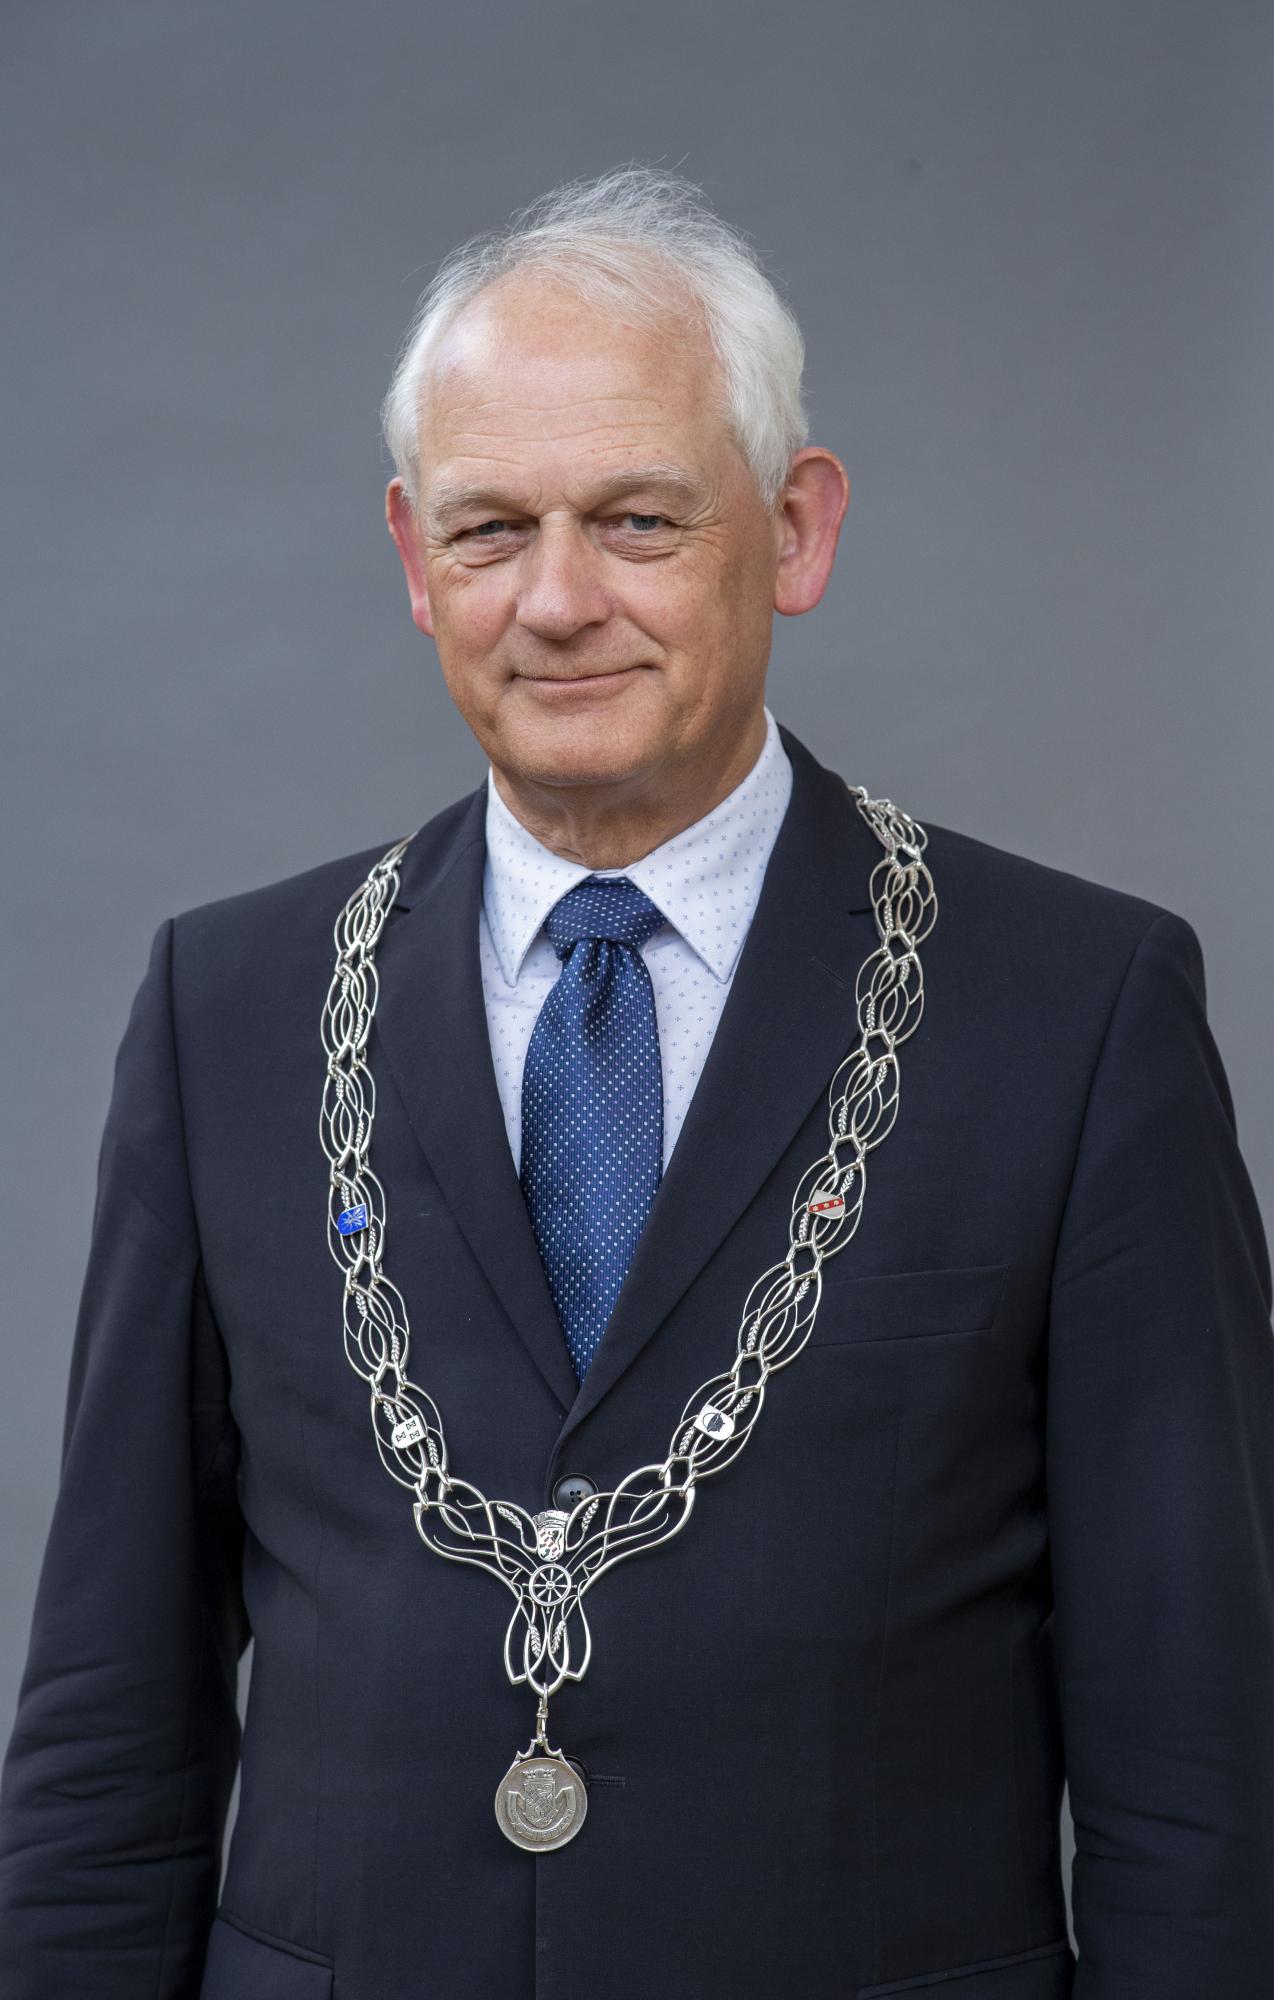 burgemeester Lamers